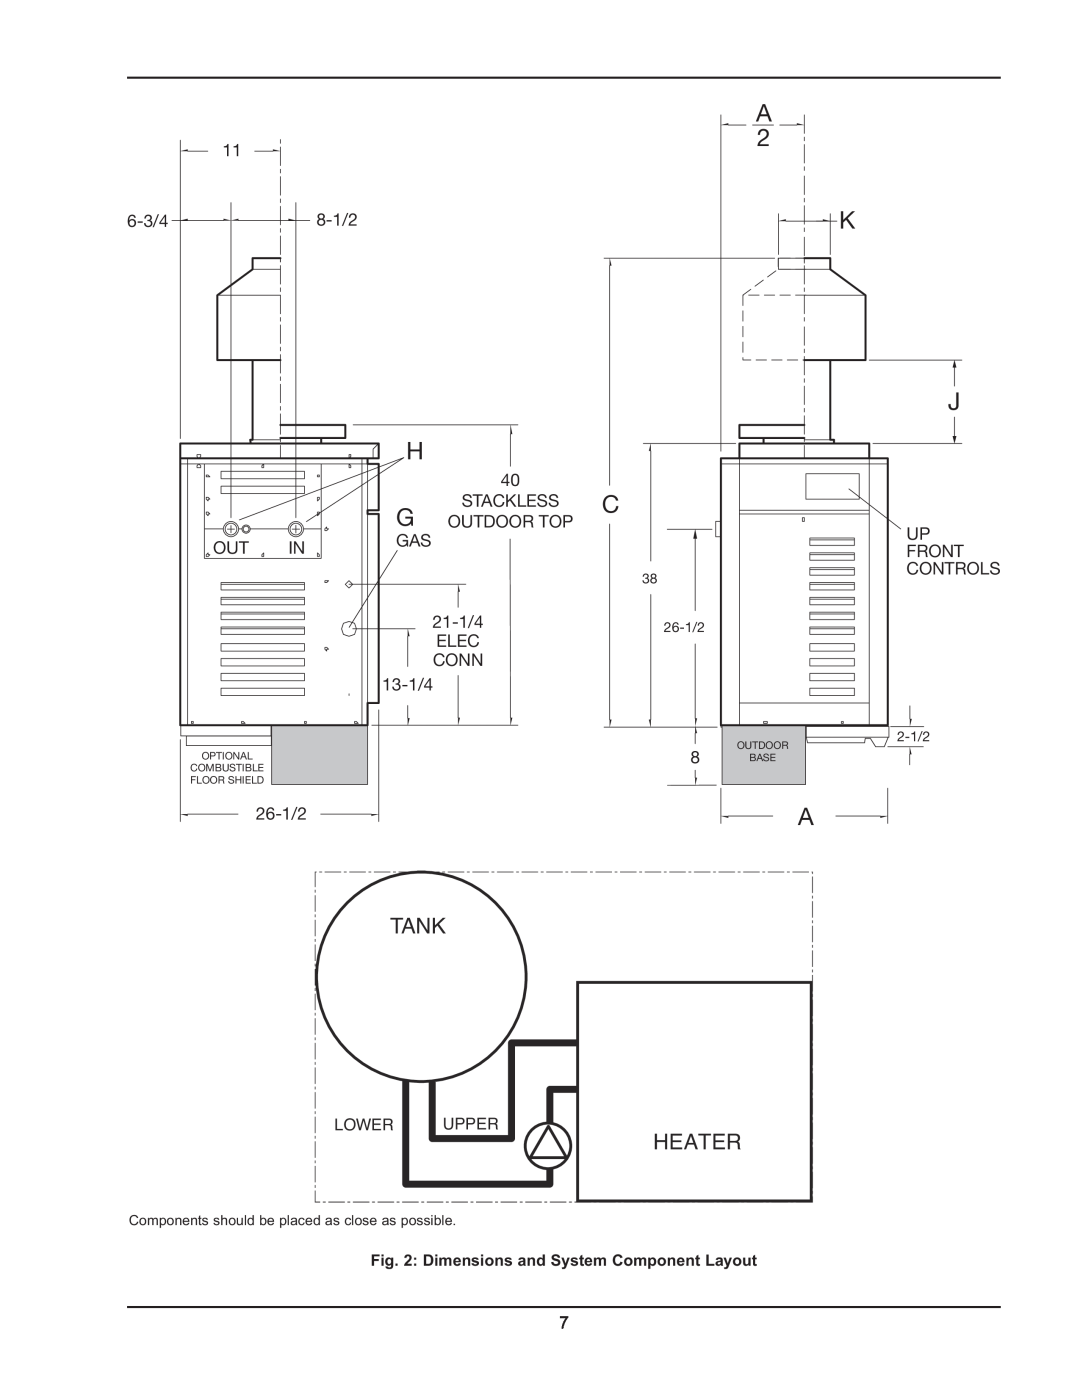 Raypak 2600401 operating instructions A 2 K J, Tank, Heater 